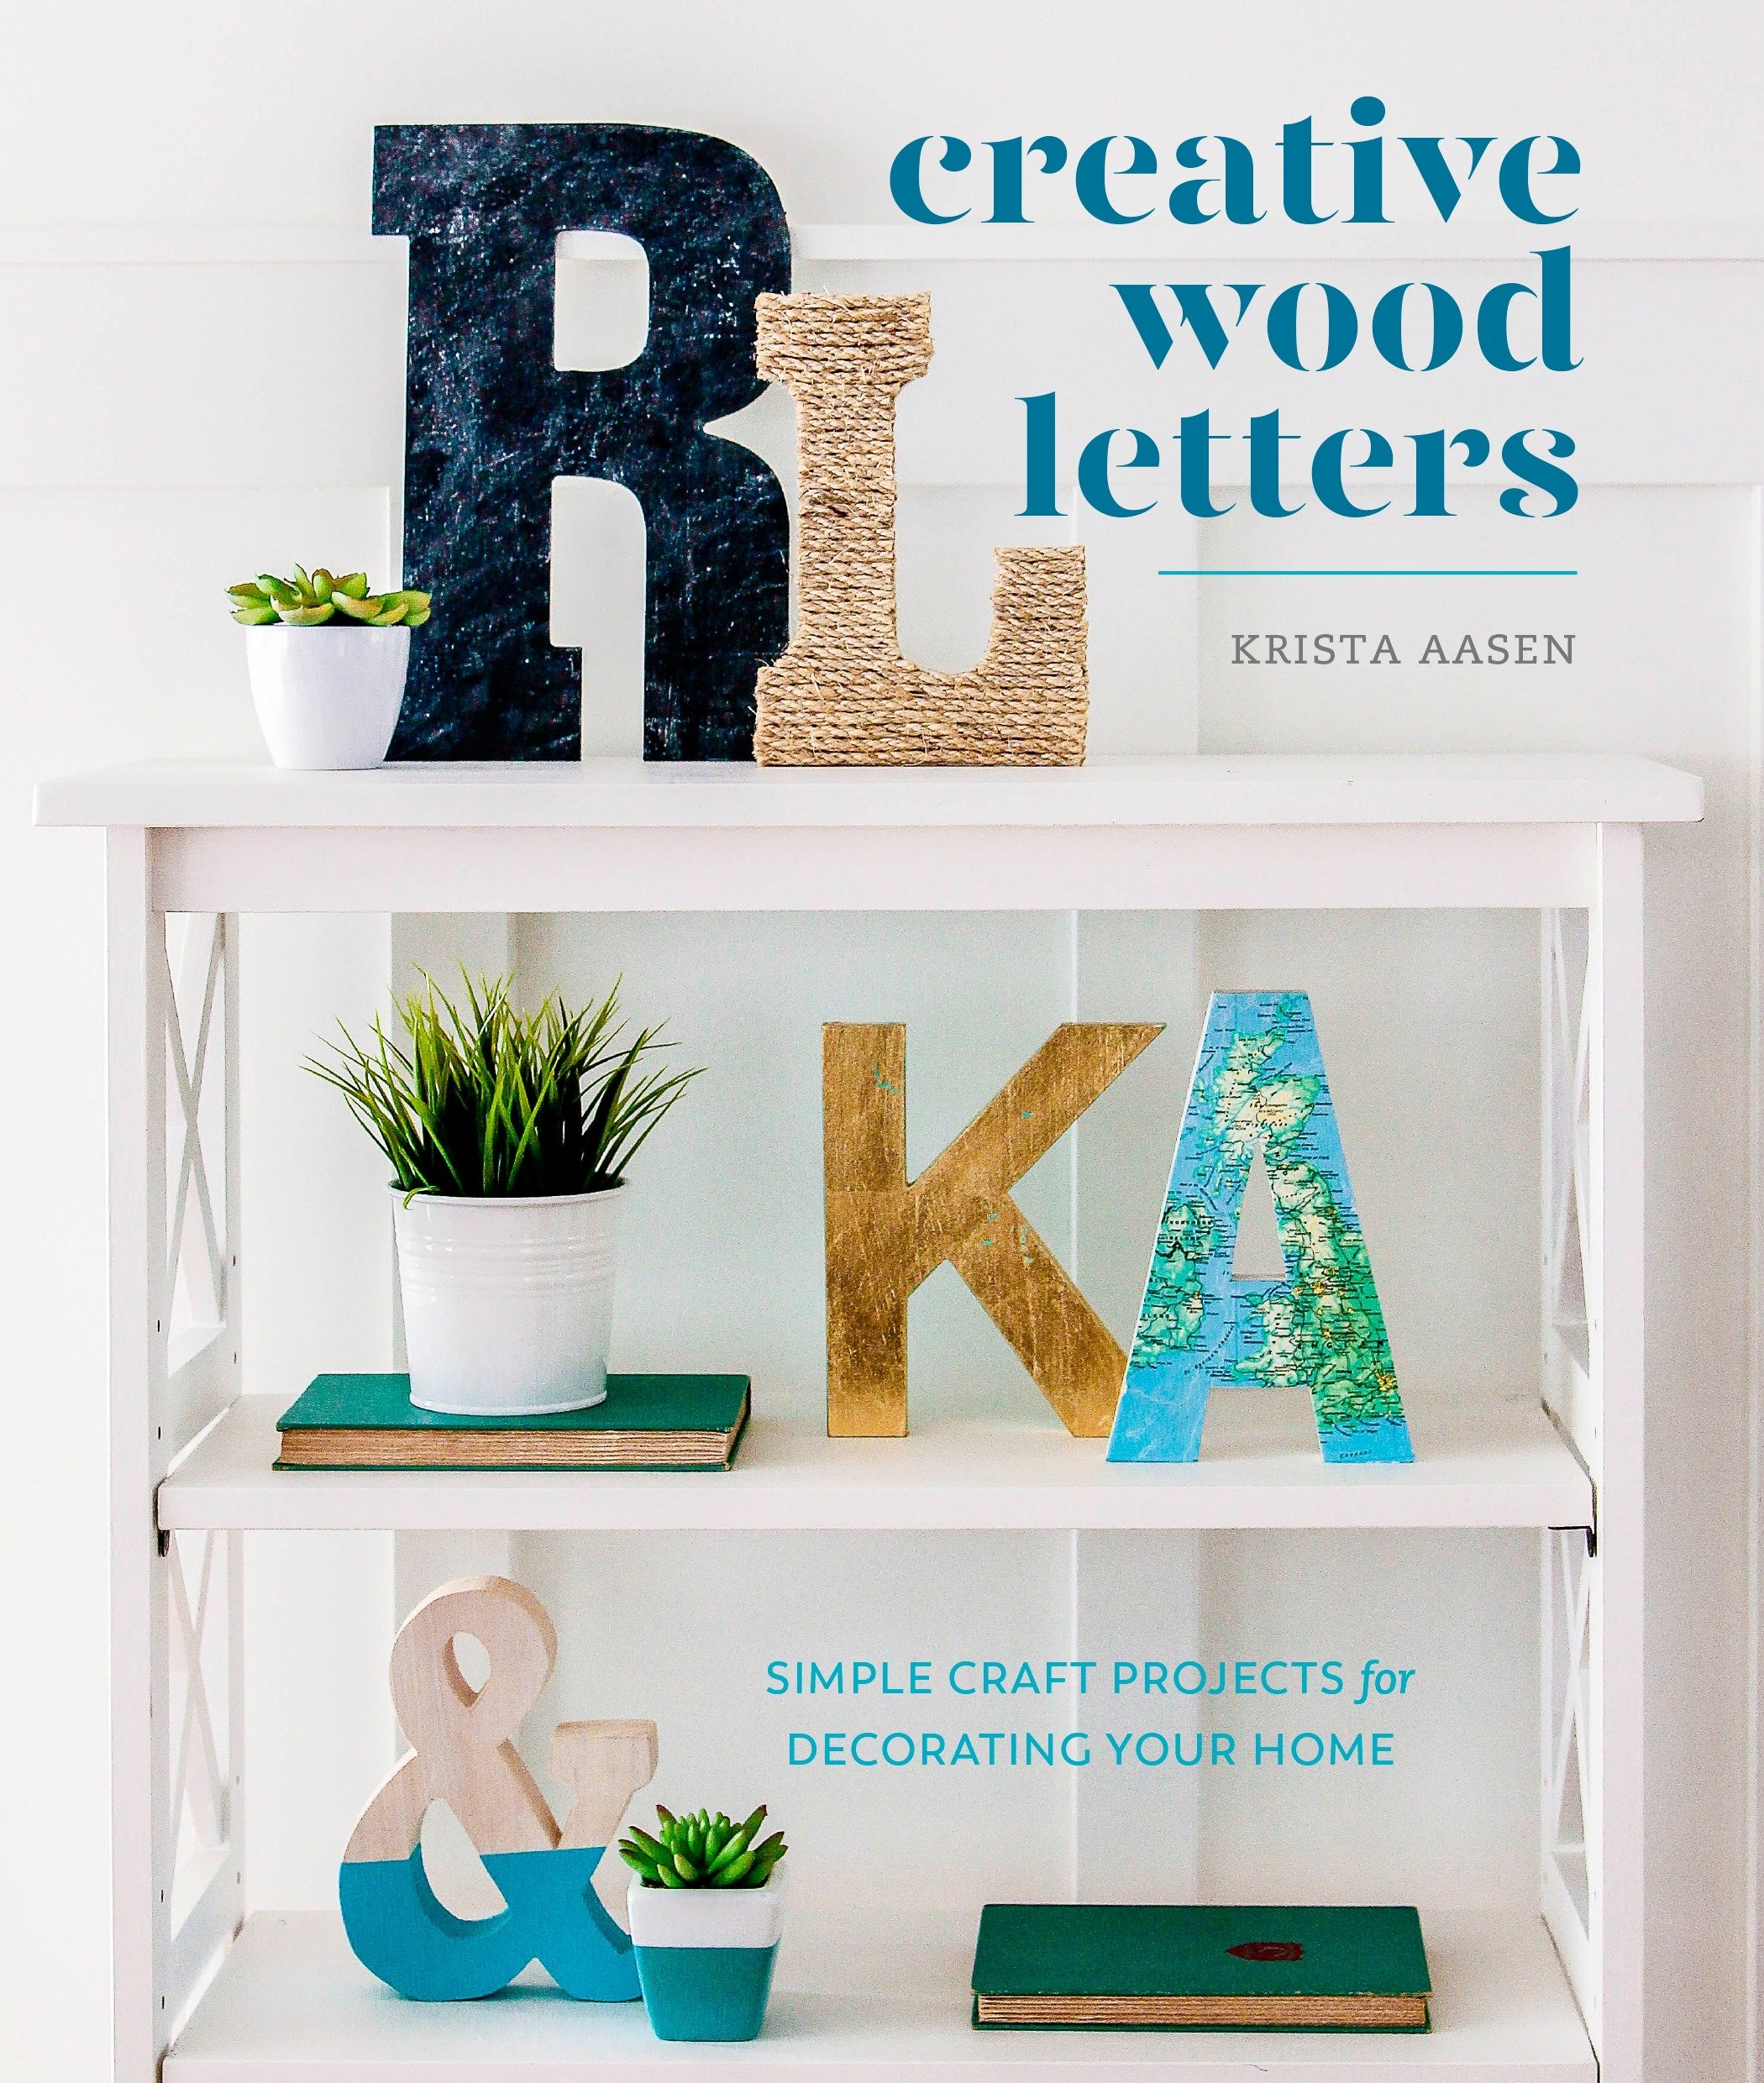 Creative wood letters on a shelf.